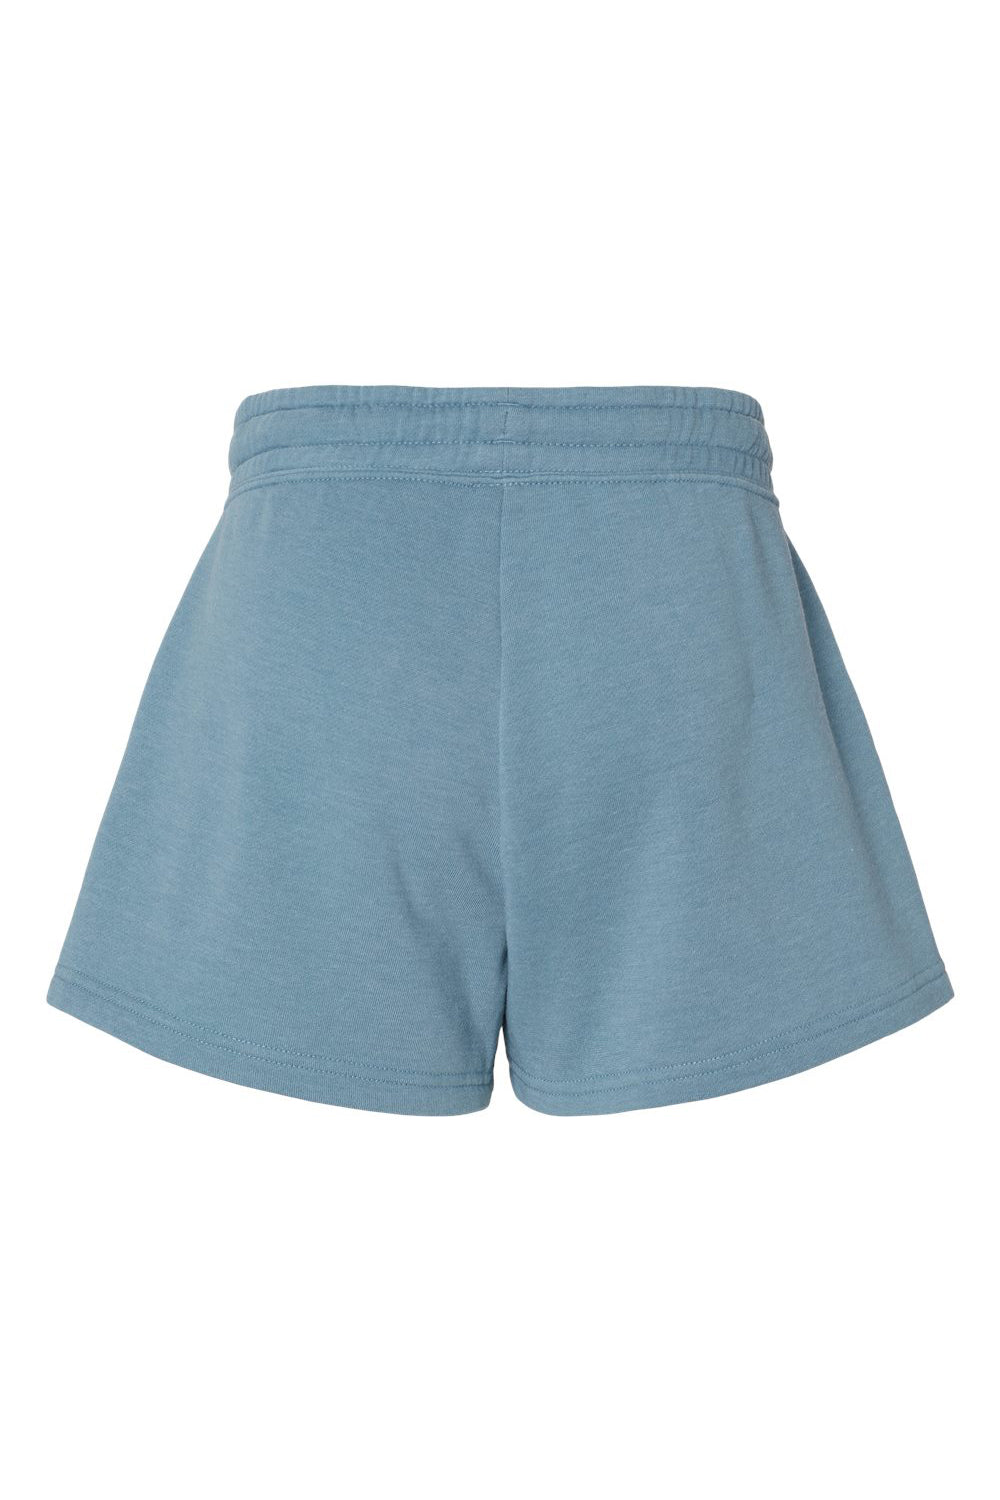 Independent Trading Co. PRM20SRT Womens California Wave Wash Fleece Shorts w/ Pockets Misty Blue Flat Back